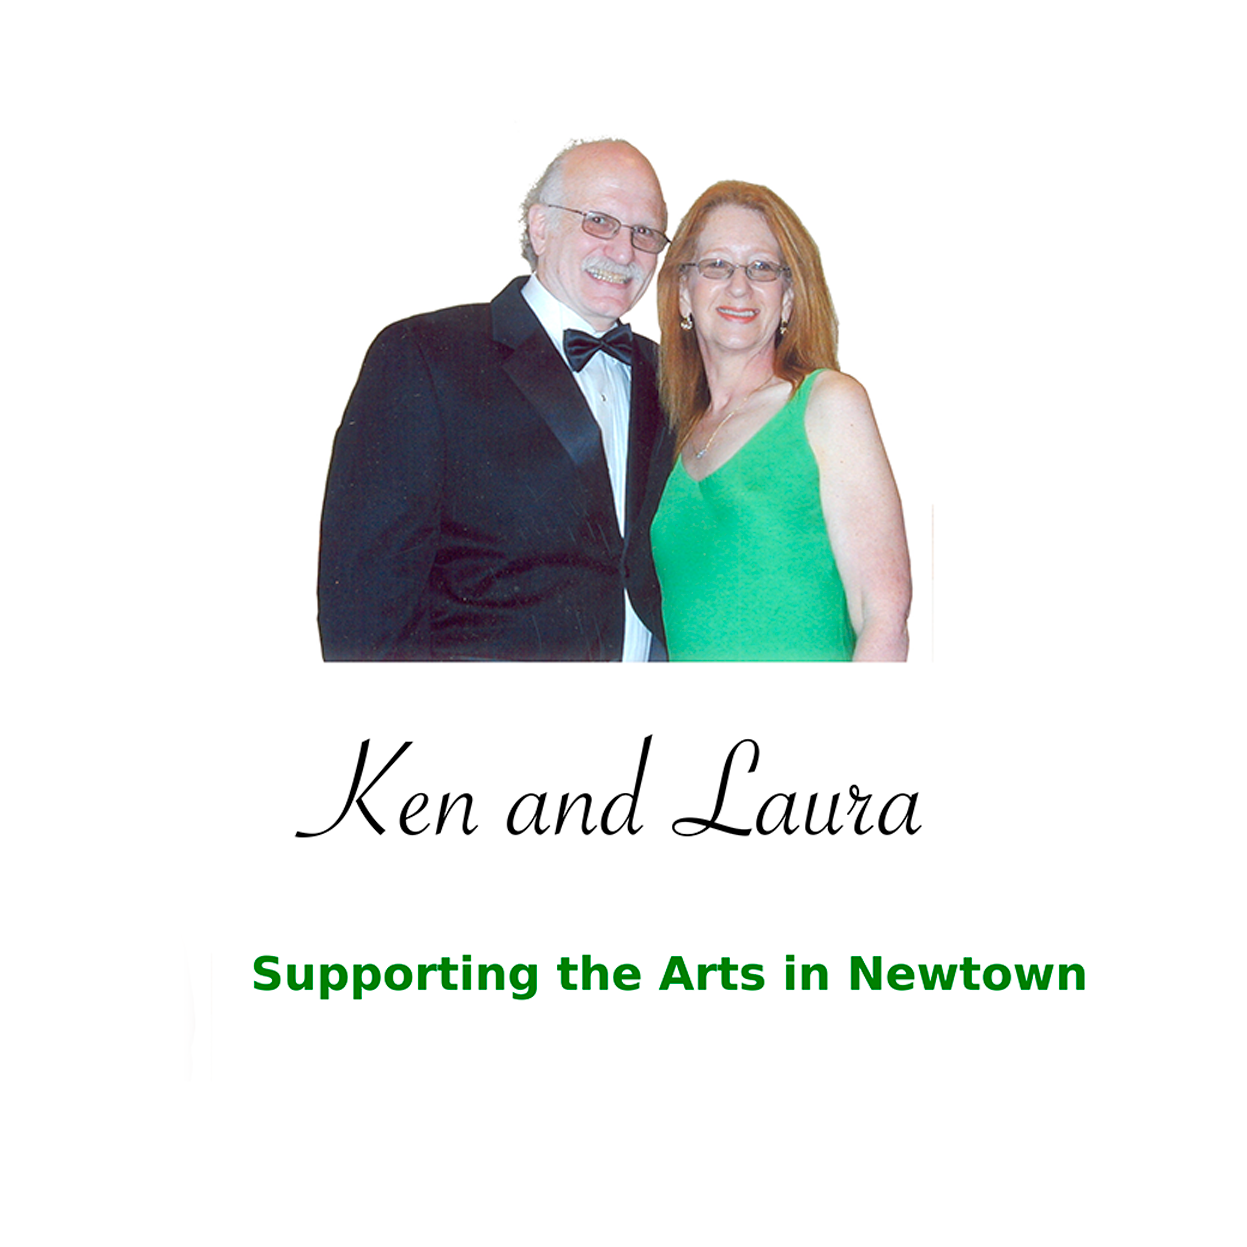 Ken and Laura Lerman